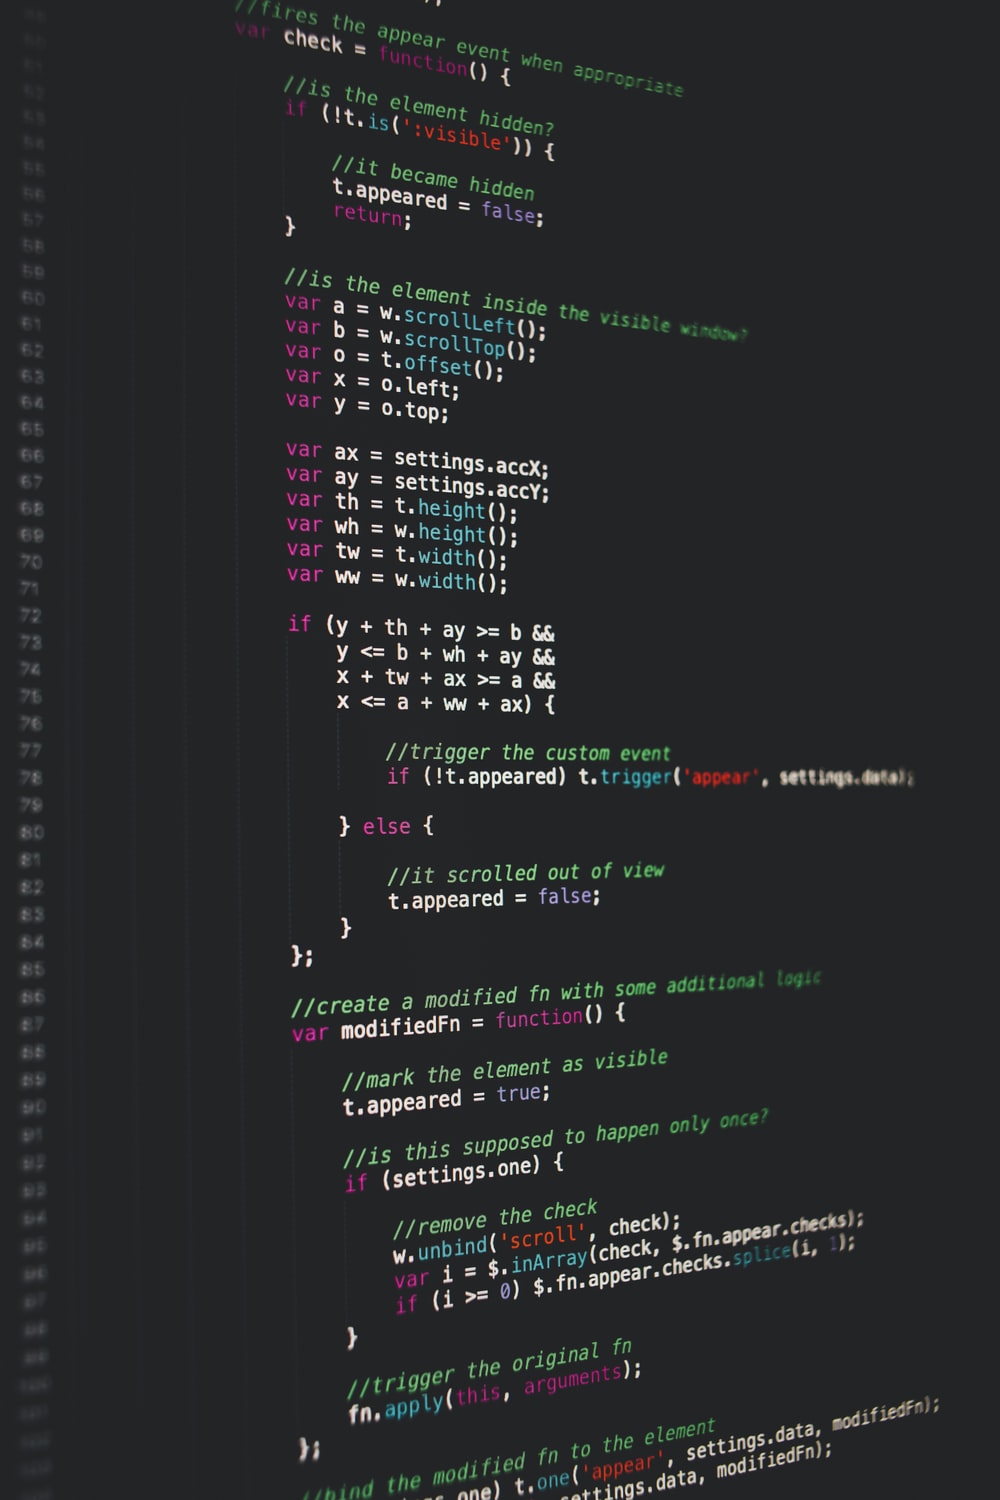 40+ Programming Code Wallpapers - Download at WallpaperBro